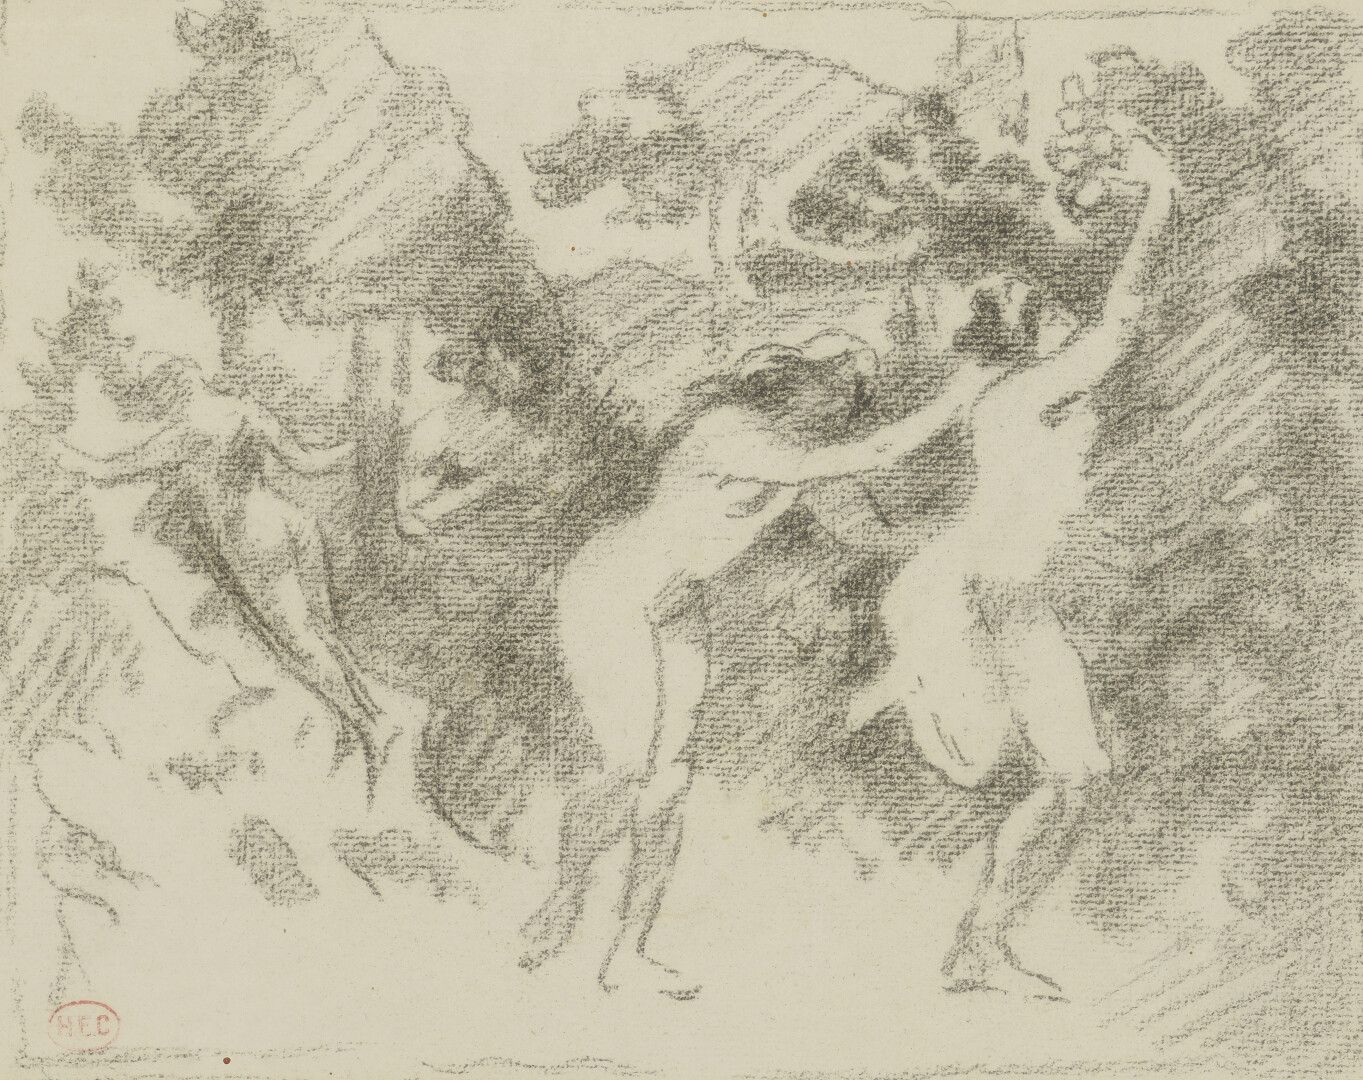 Null Henri Edmond CROSS (1855-1910)

仙女的飞行》的研究，1906年

炭笔和蚀刻画。

左下角有图案。背面写着 "Comp&hellip;